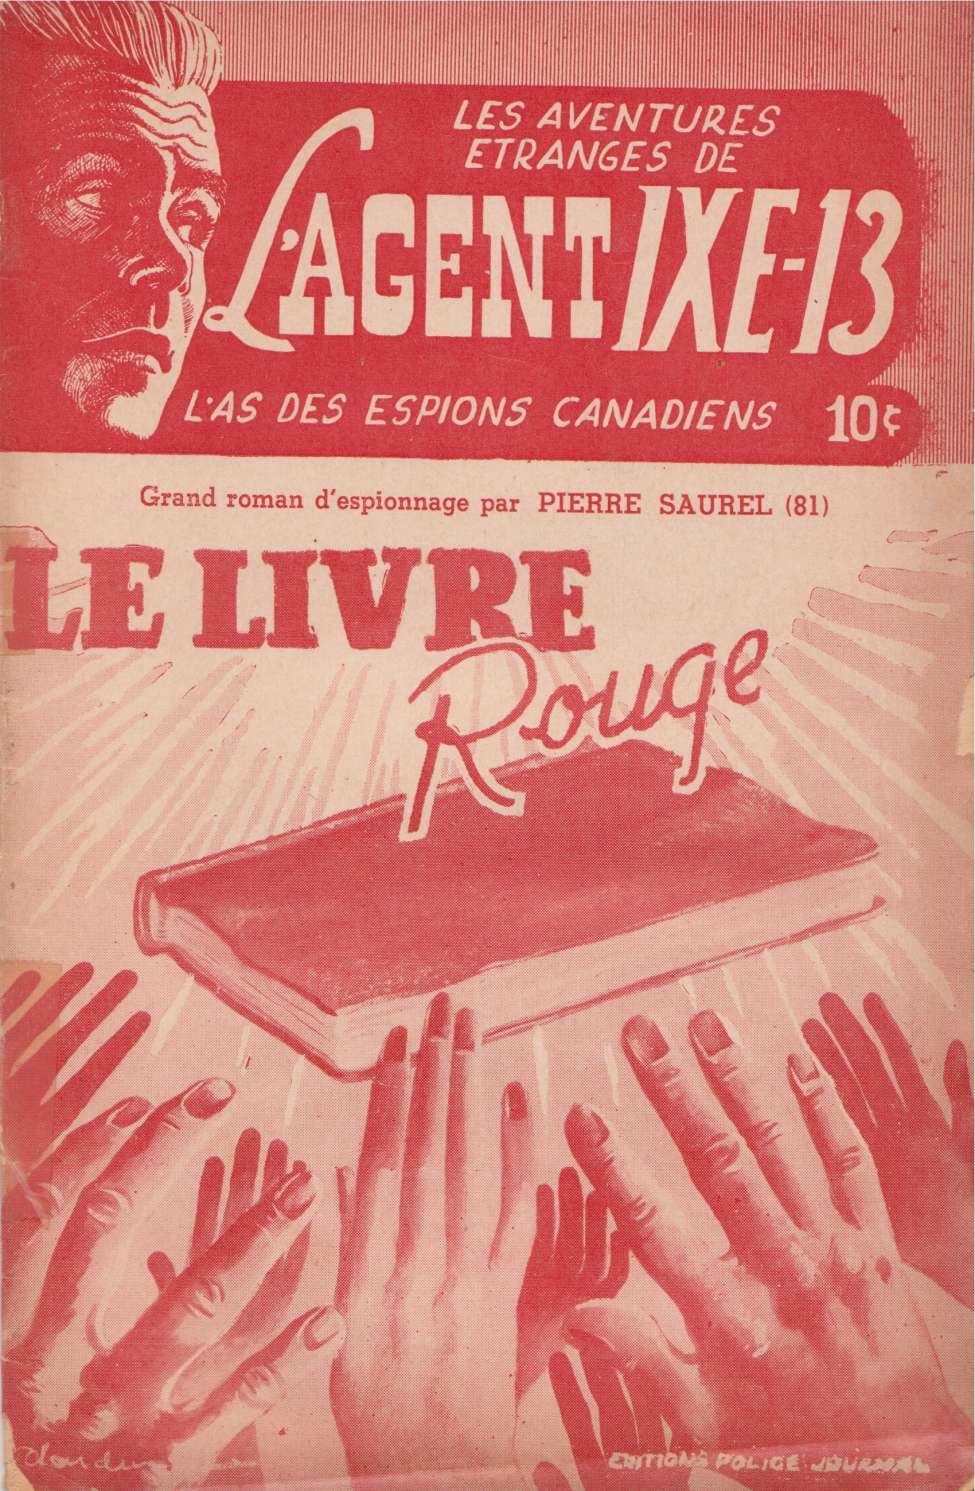 Book Cover For L'Agent IXE-13 v2 81 - Le livre rouge